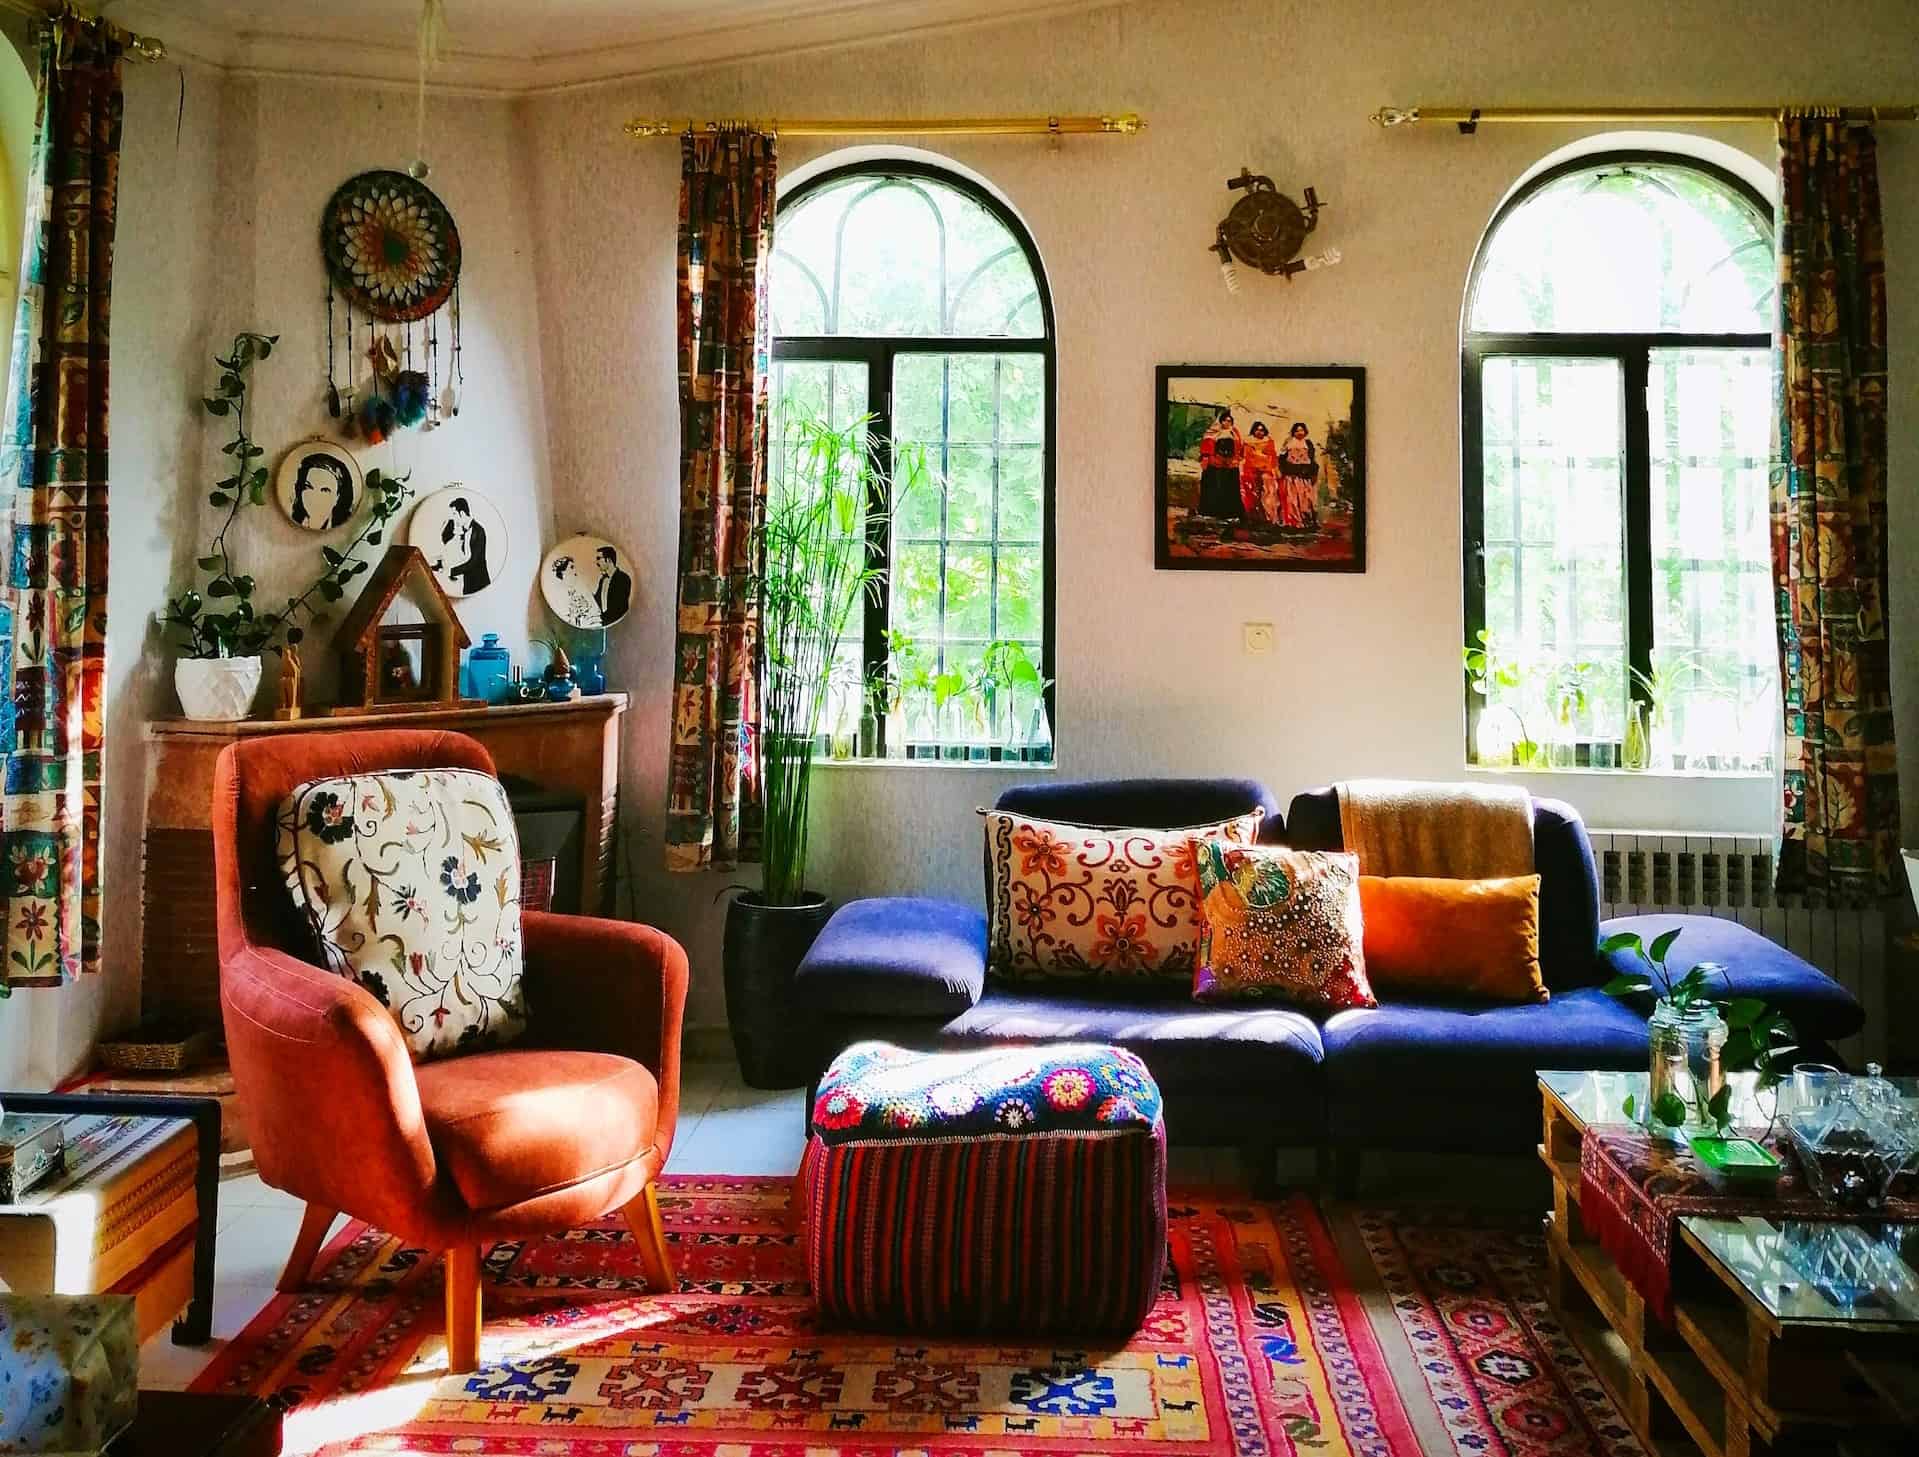 Boho style living room